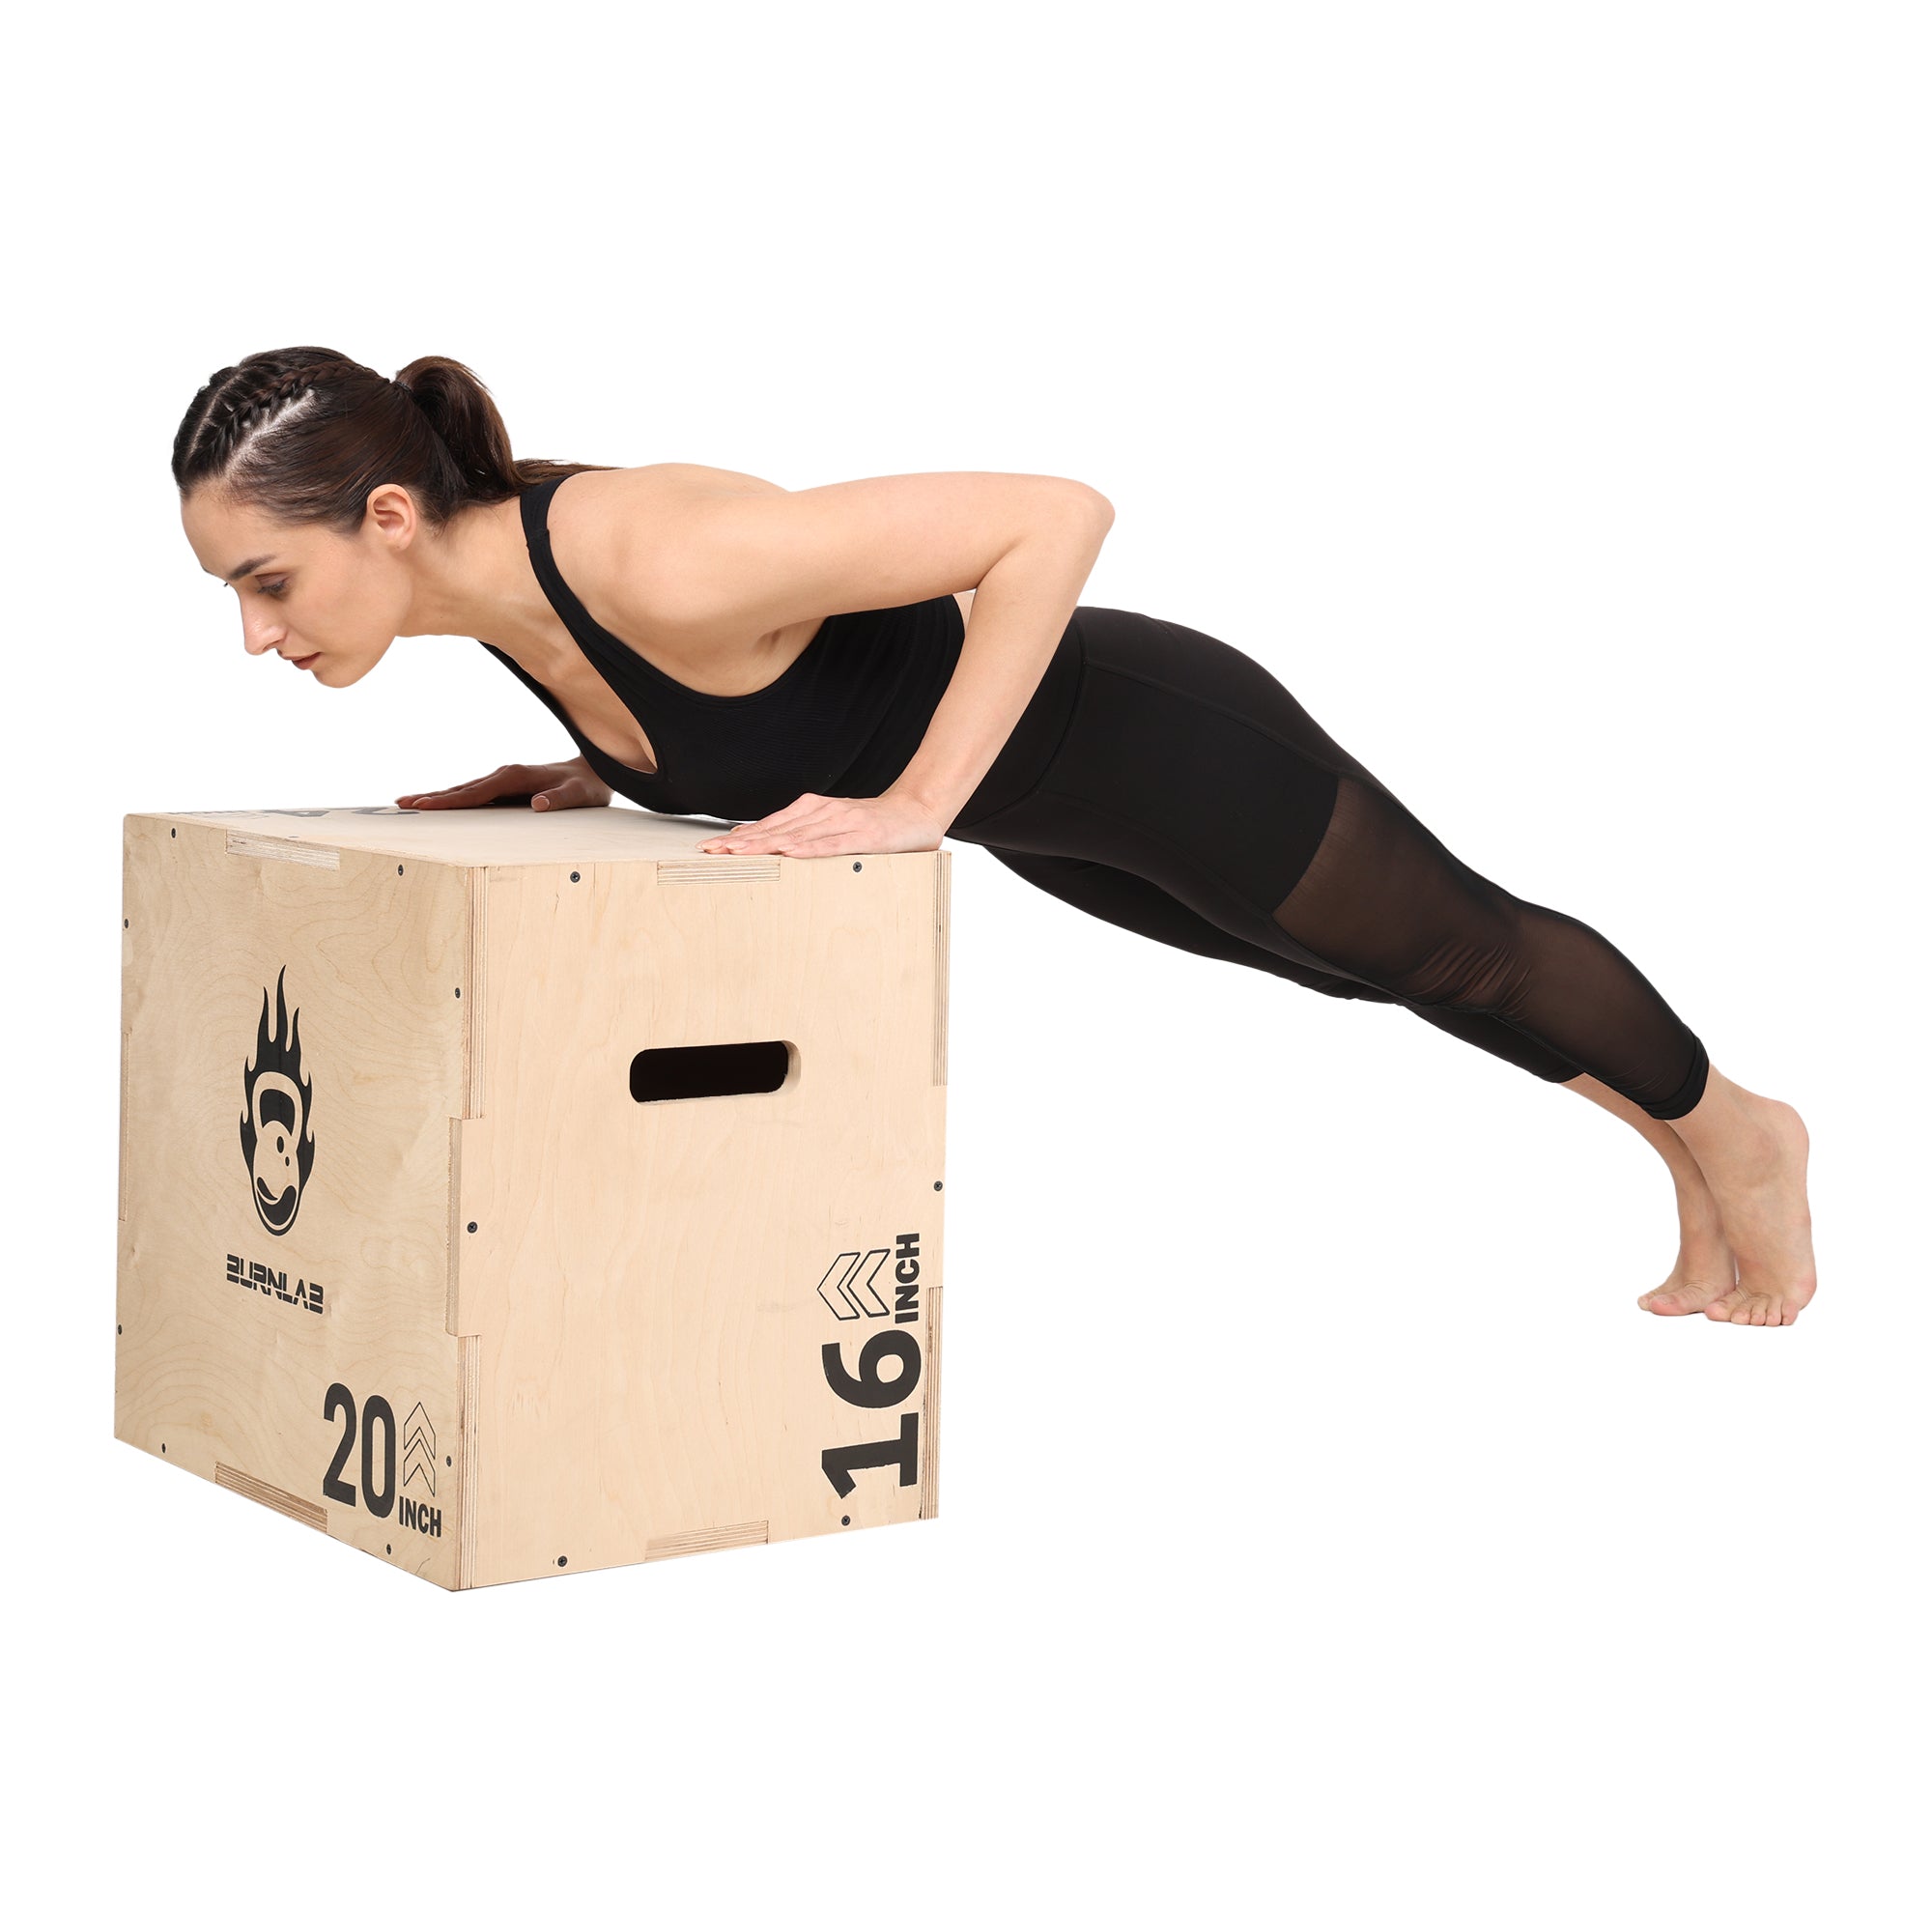 Burnlab Plyo Box, Wooden 3-in-1 Plyometric Jump Box for Training - Squat, Step Up, Box Jumps & More